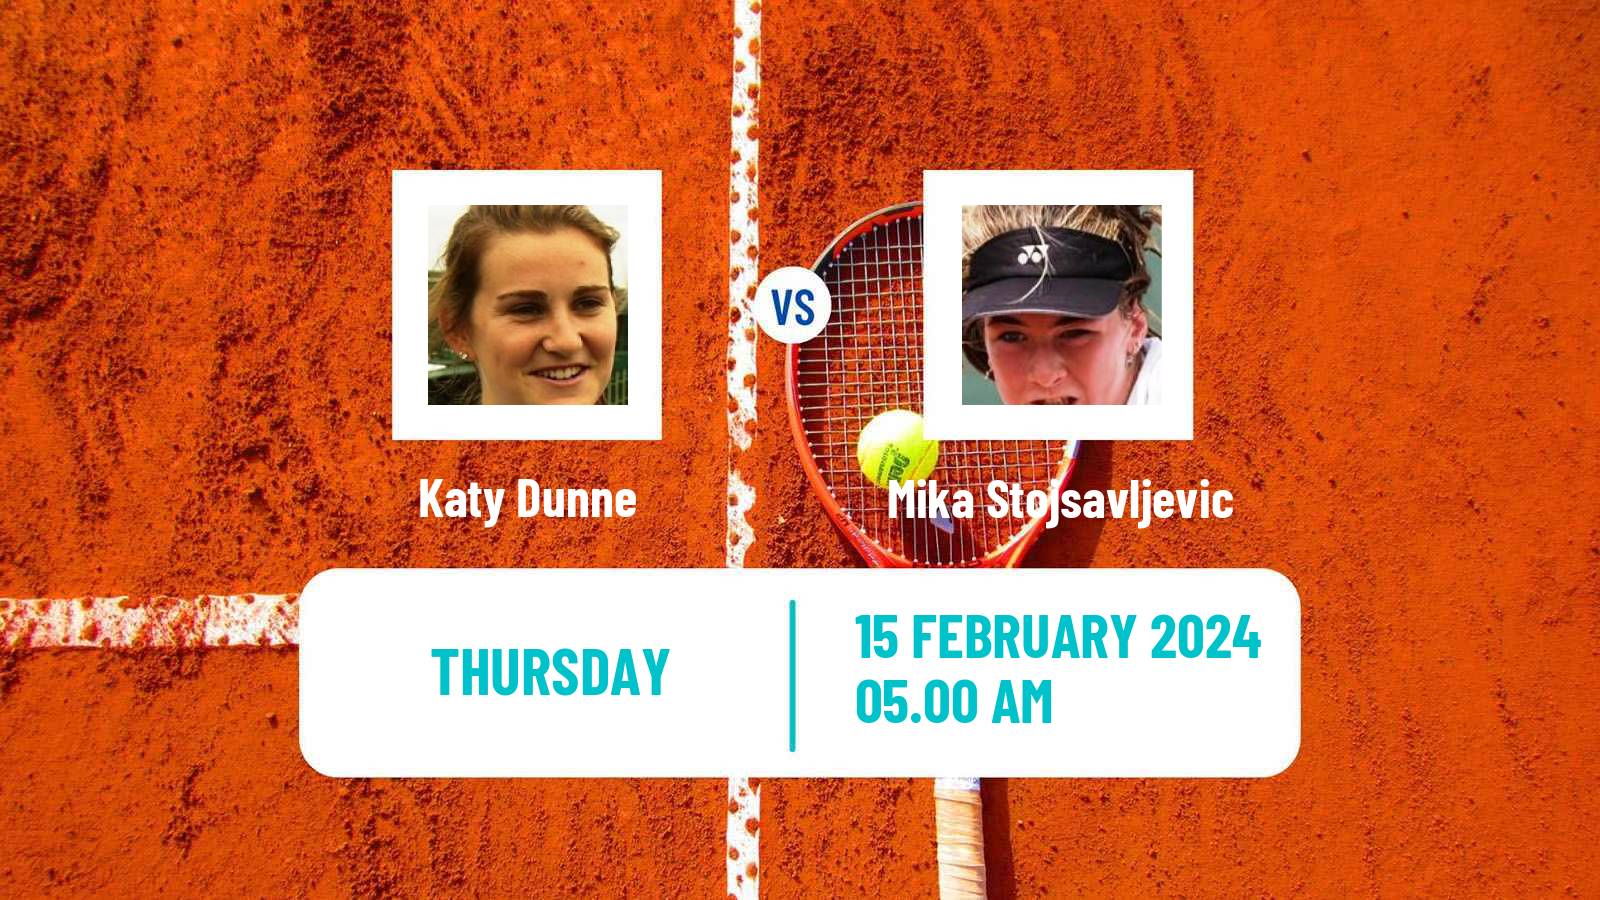 Tennis ITF W50 Roehampton Women Katy Dunne - Mika Stojsavljevic